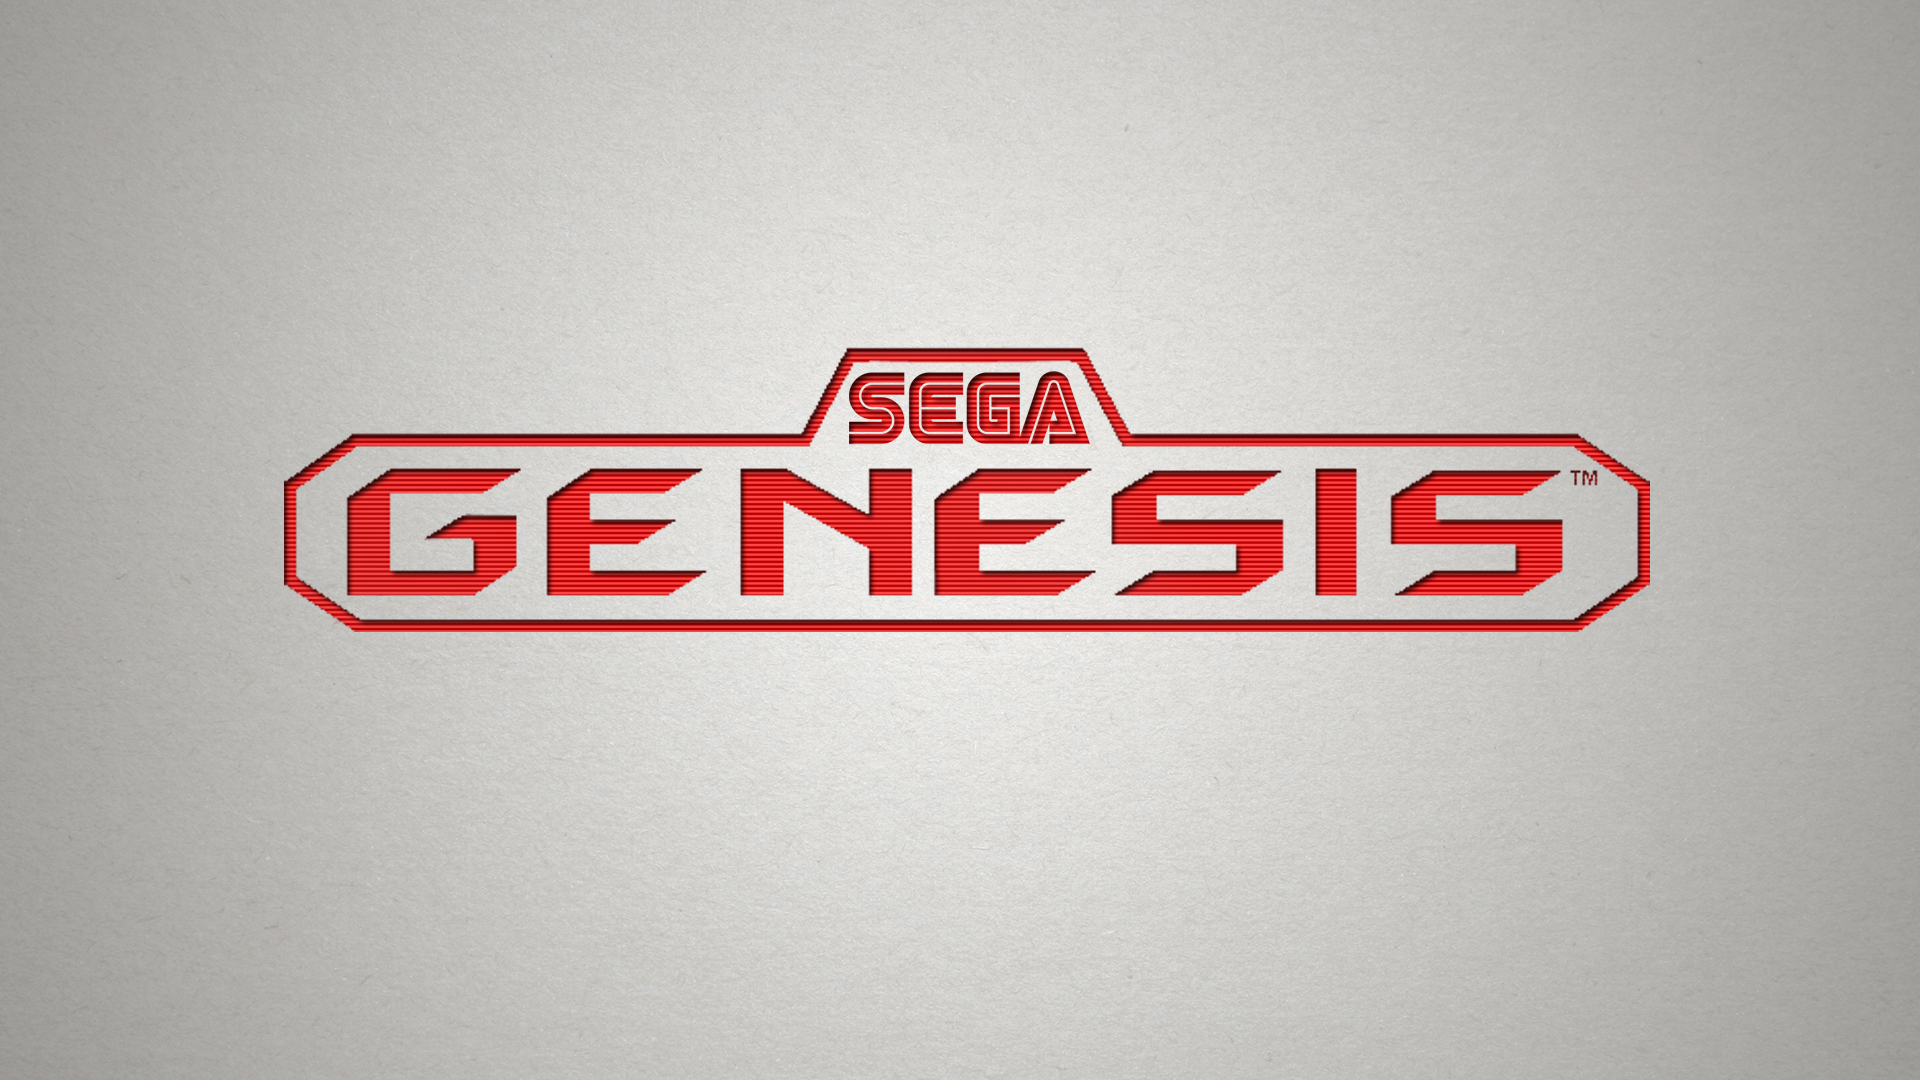 Sega Genesis Puter Wallpaper Desktop Background Id